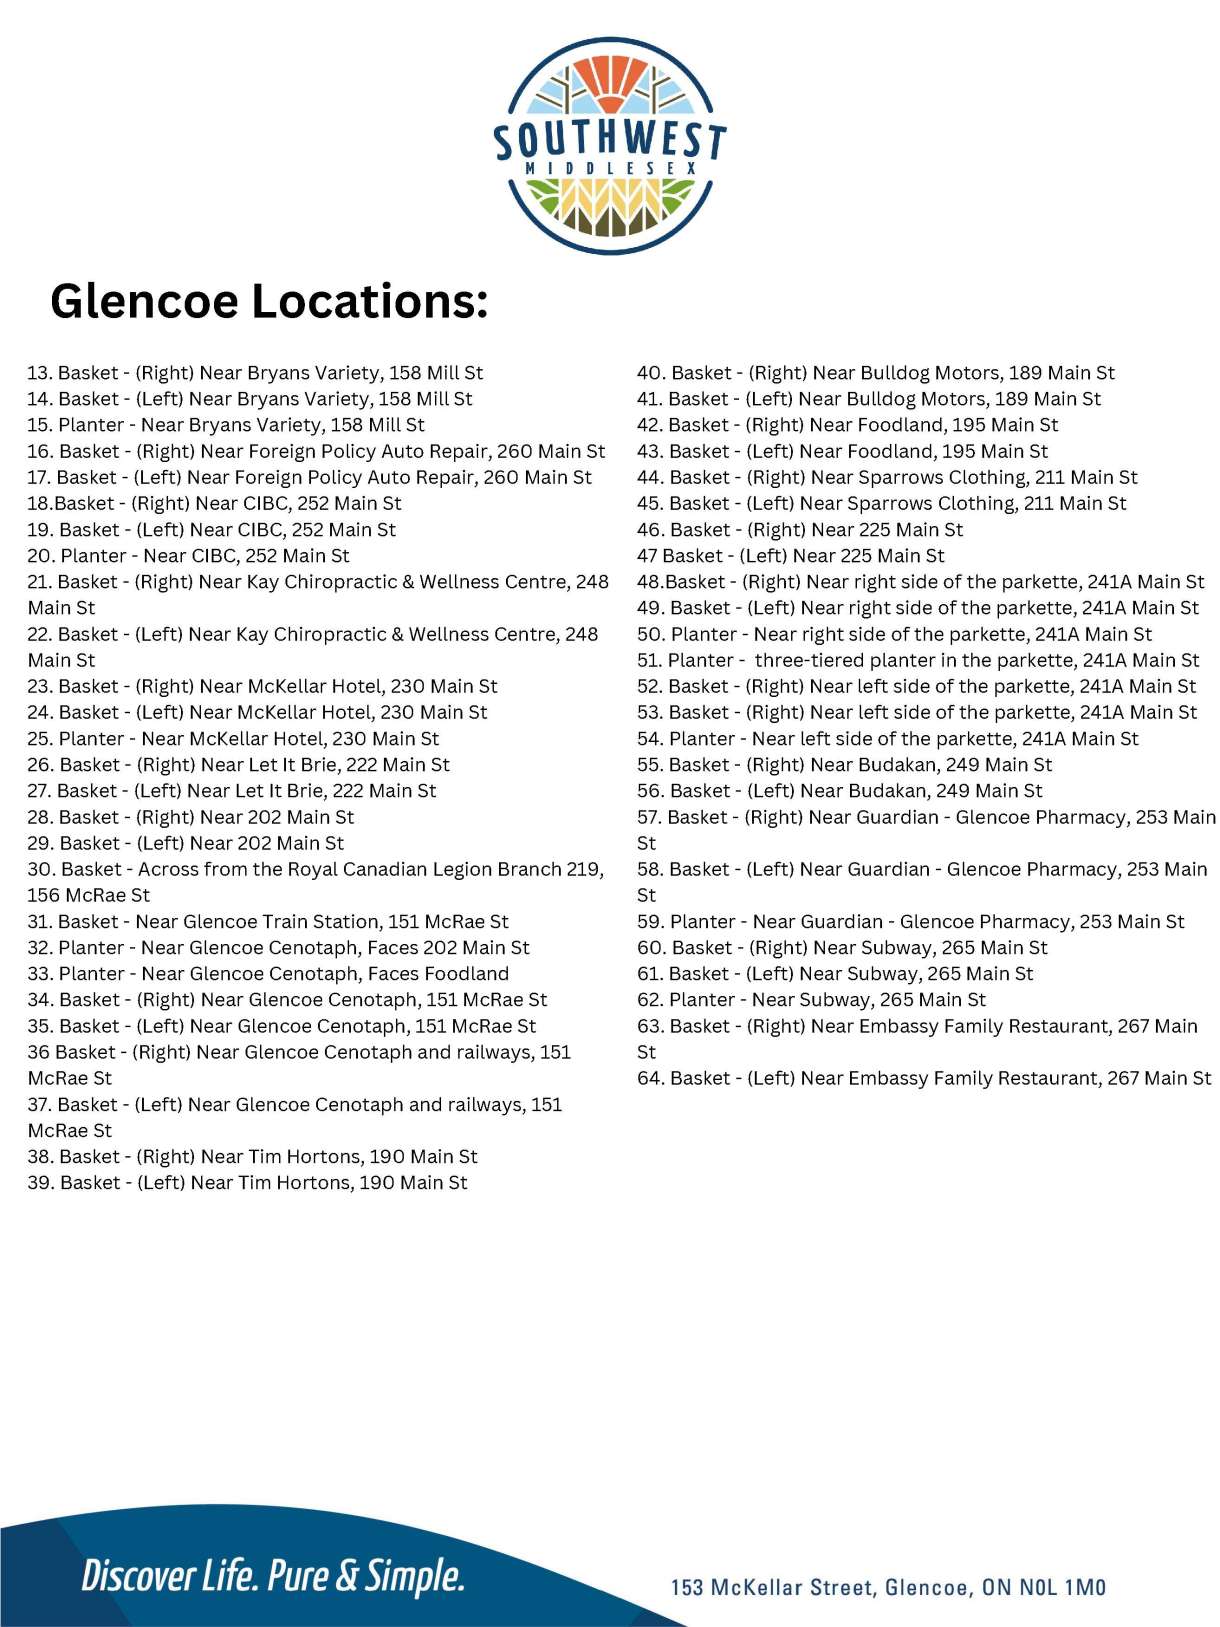 Glencoe Flower Basket Locations